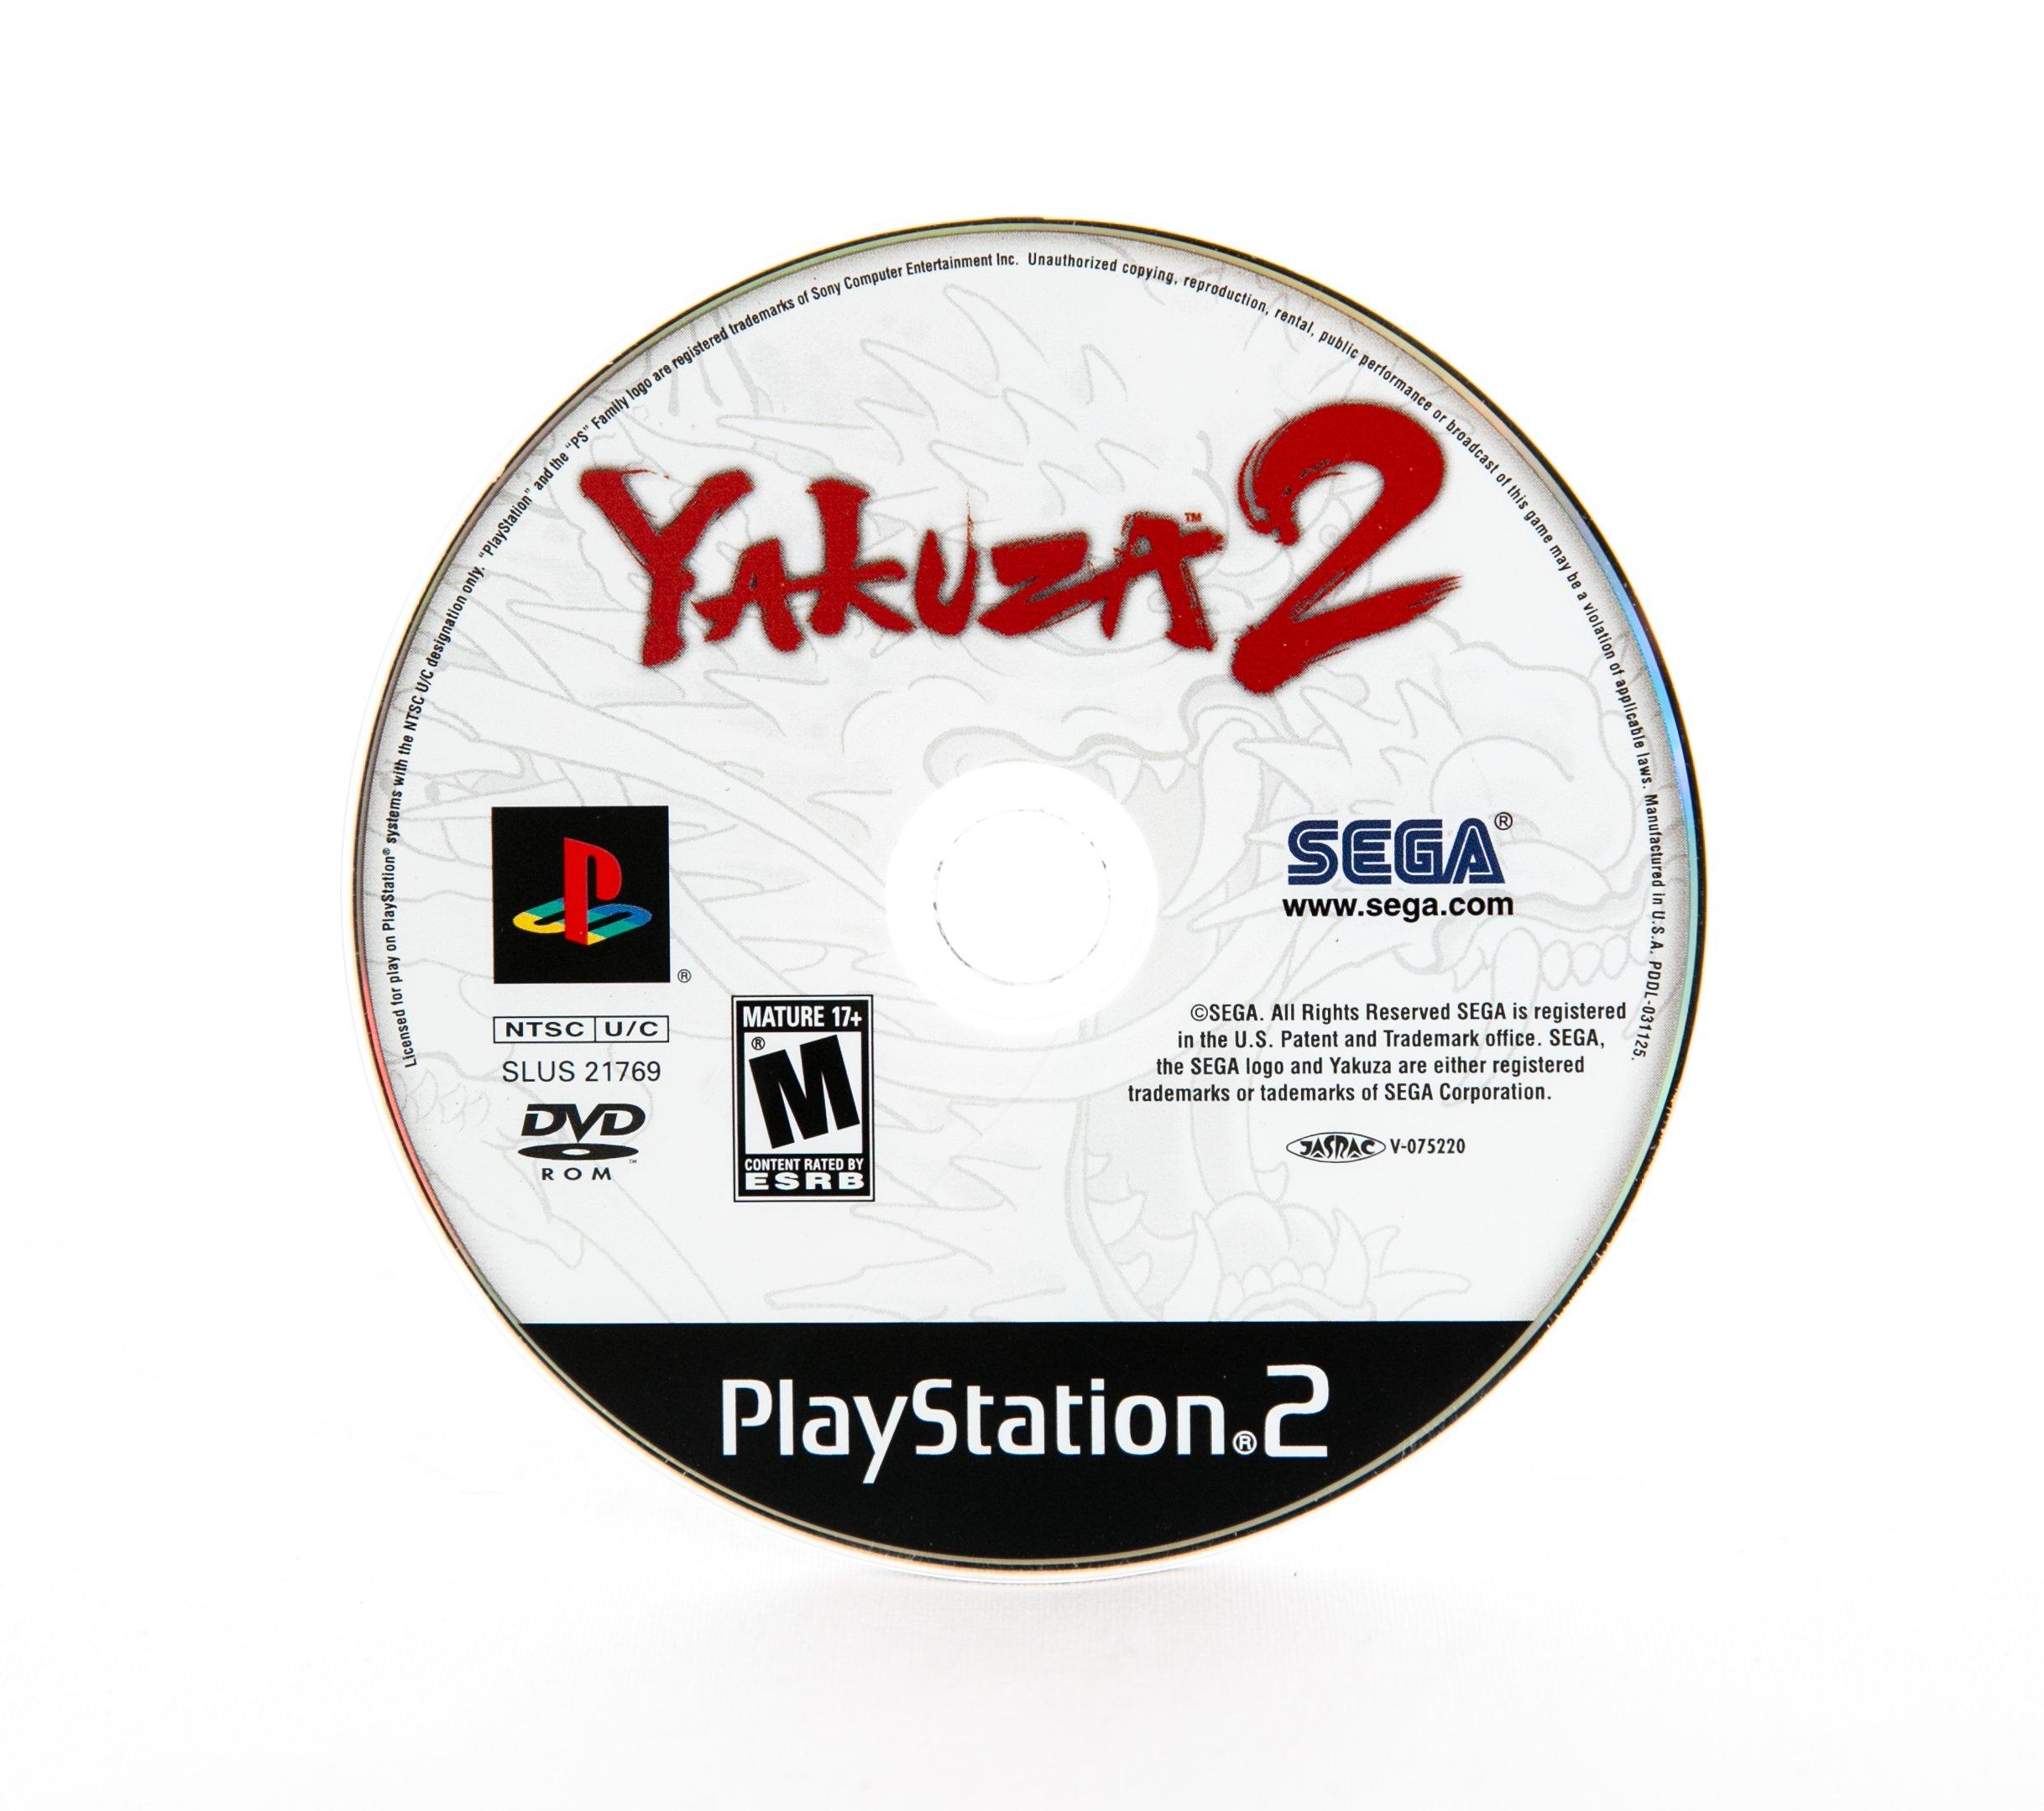 Yakuza 2 - PlayStation 2